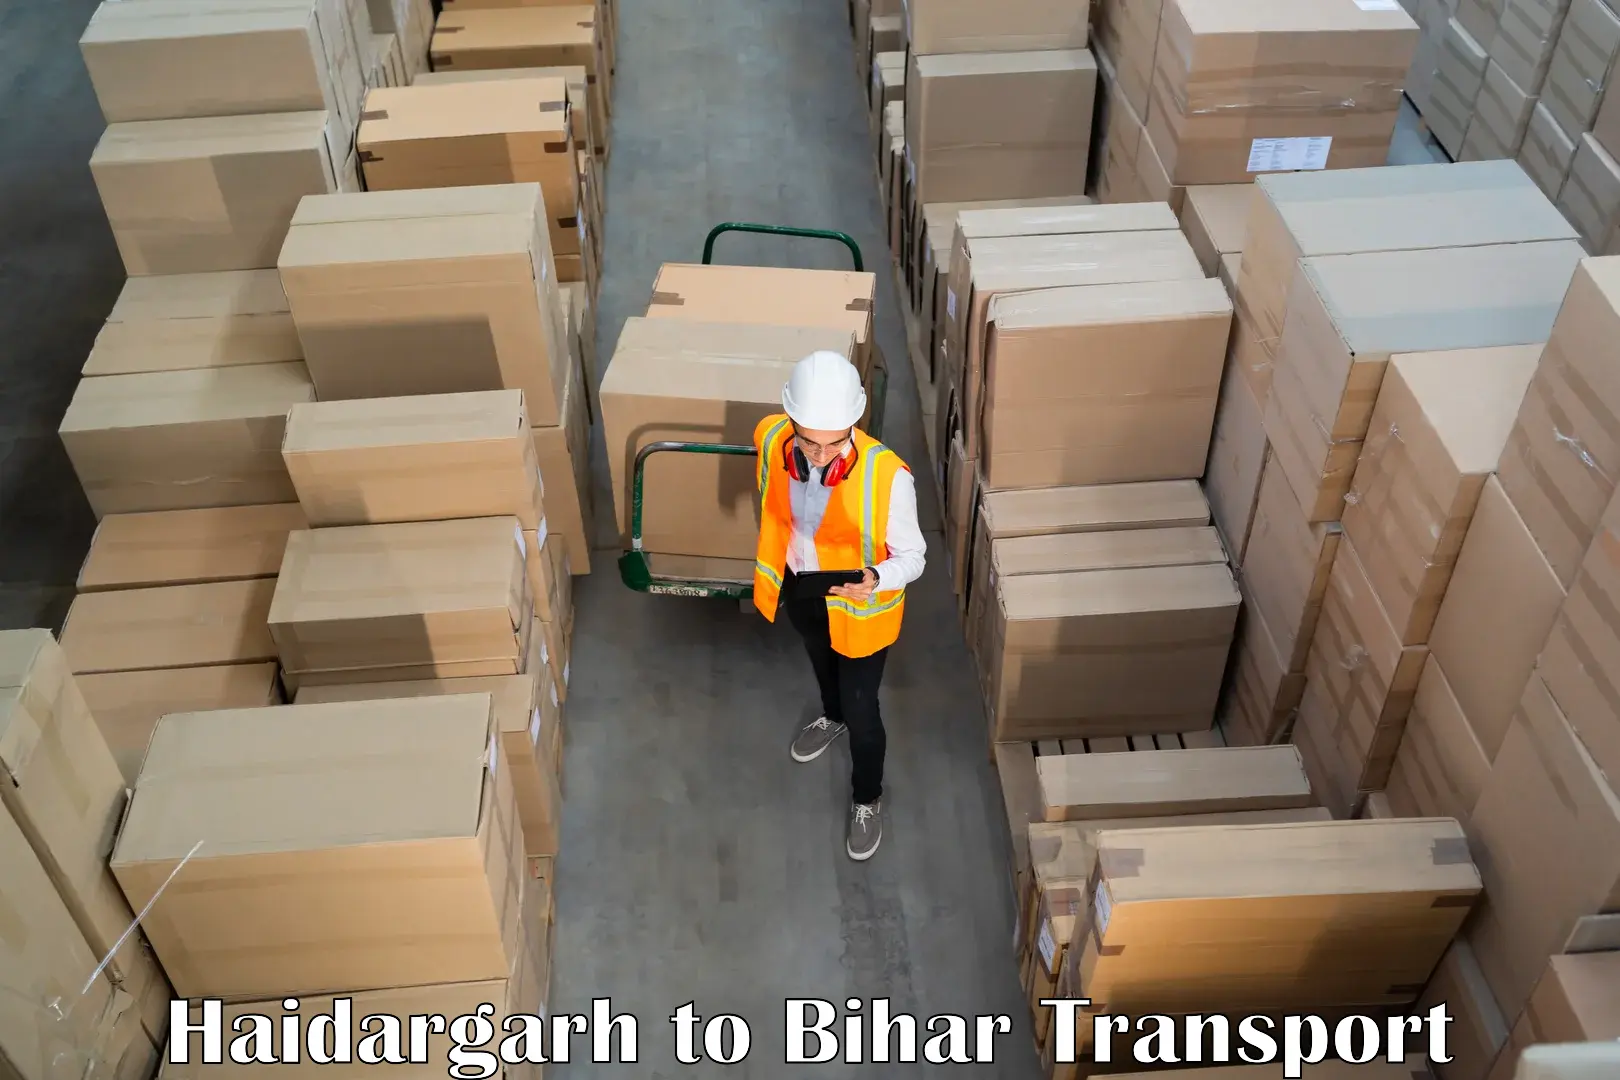 Goods delivery service in Haidargarh to Mashrakh